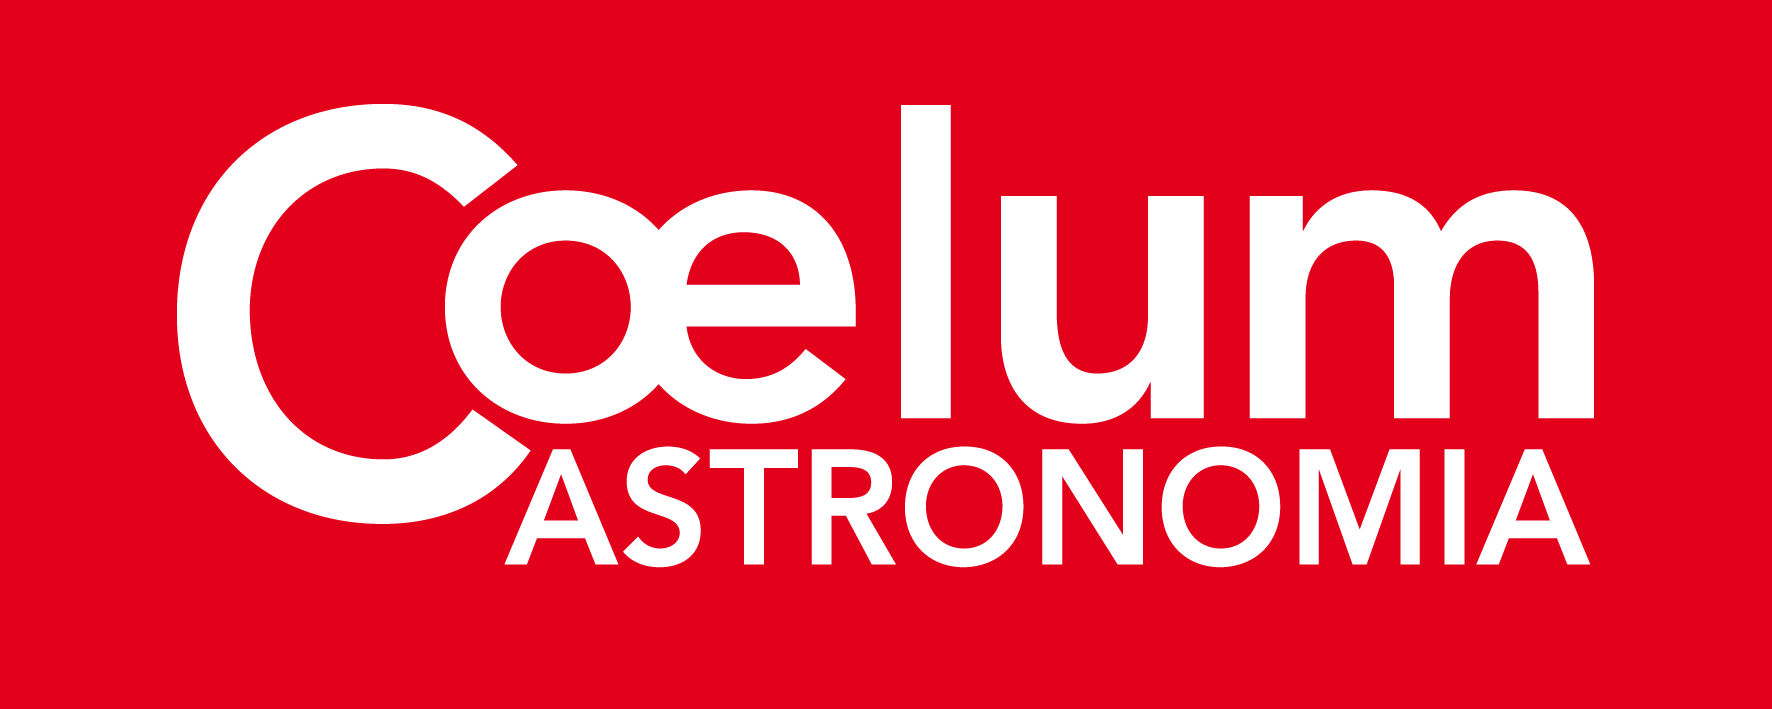 201642917285_logo-coelum-astronomia